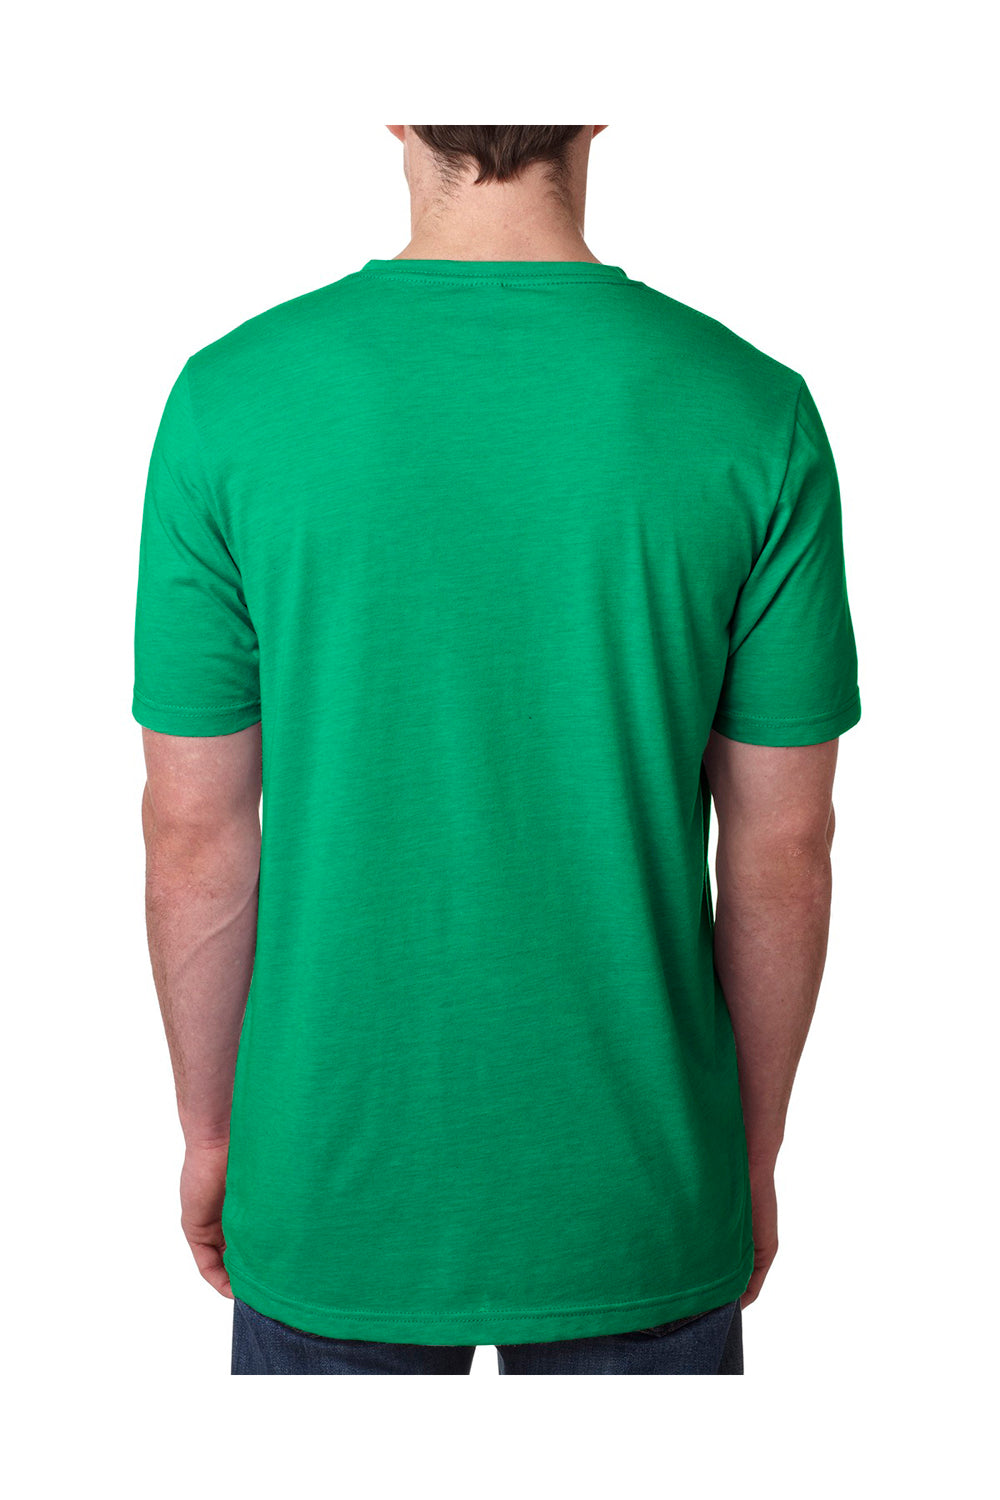 Next Level 6200 Mens Jersey Short Sleeve Crewneck T-Shirt Envy Green Back